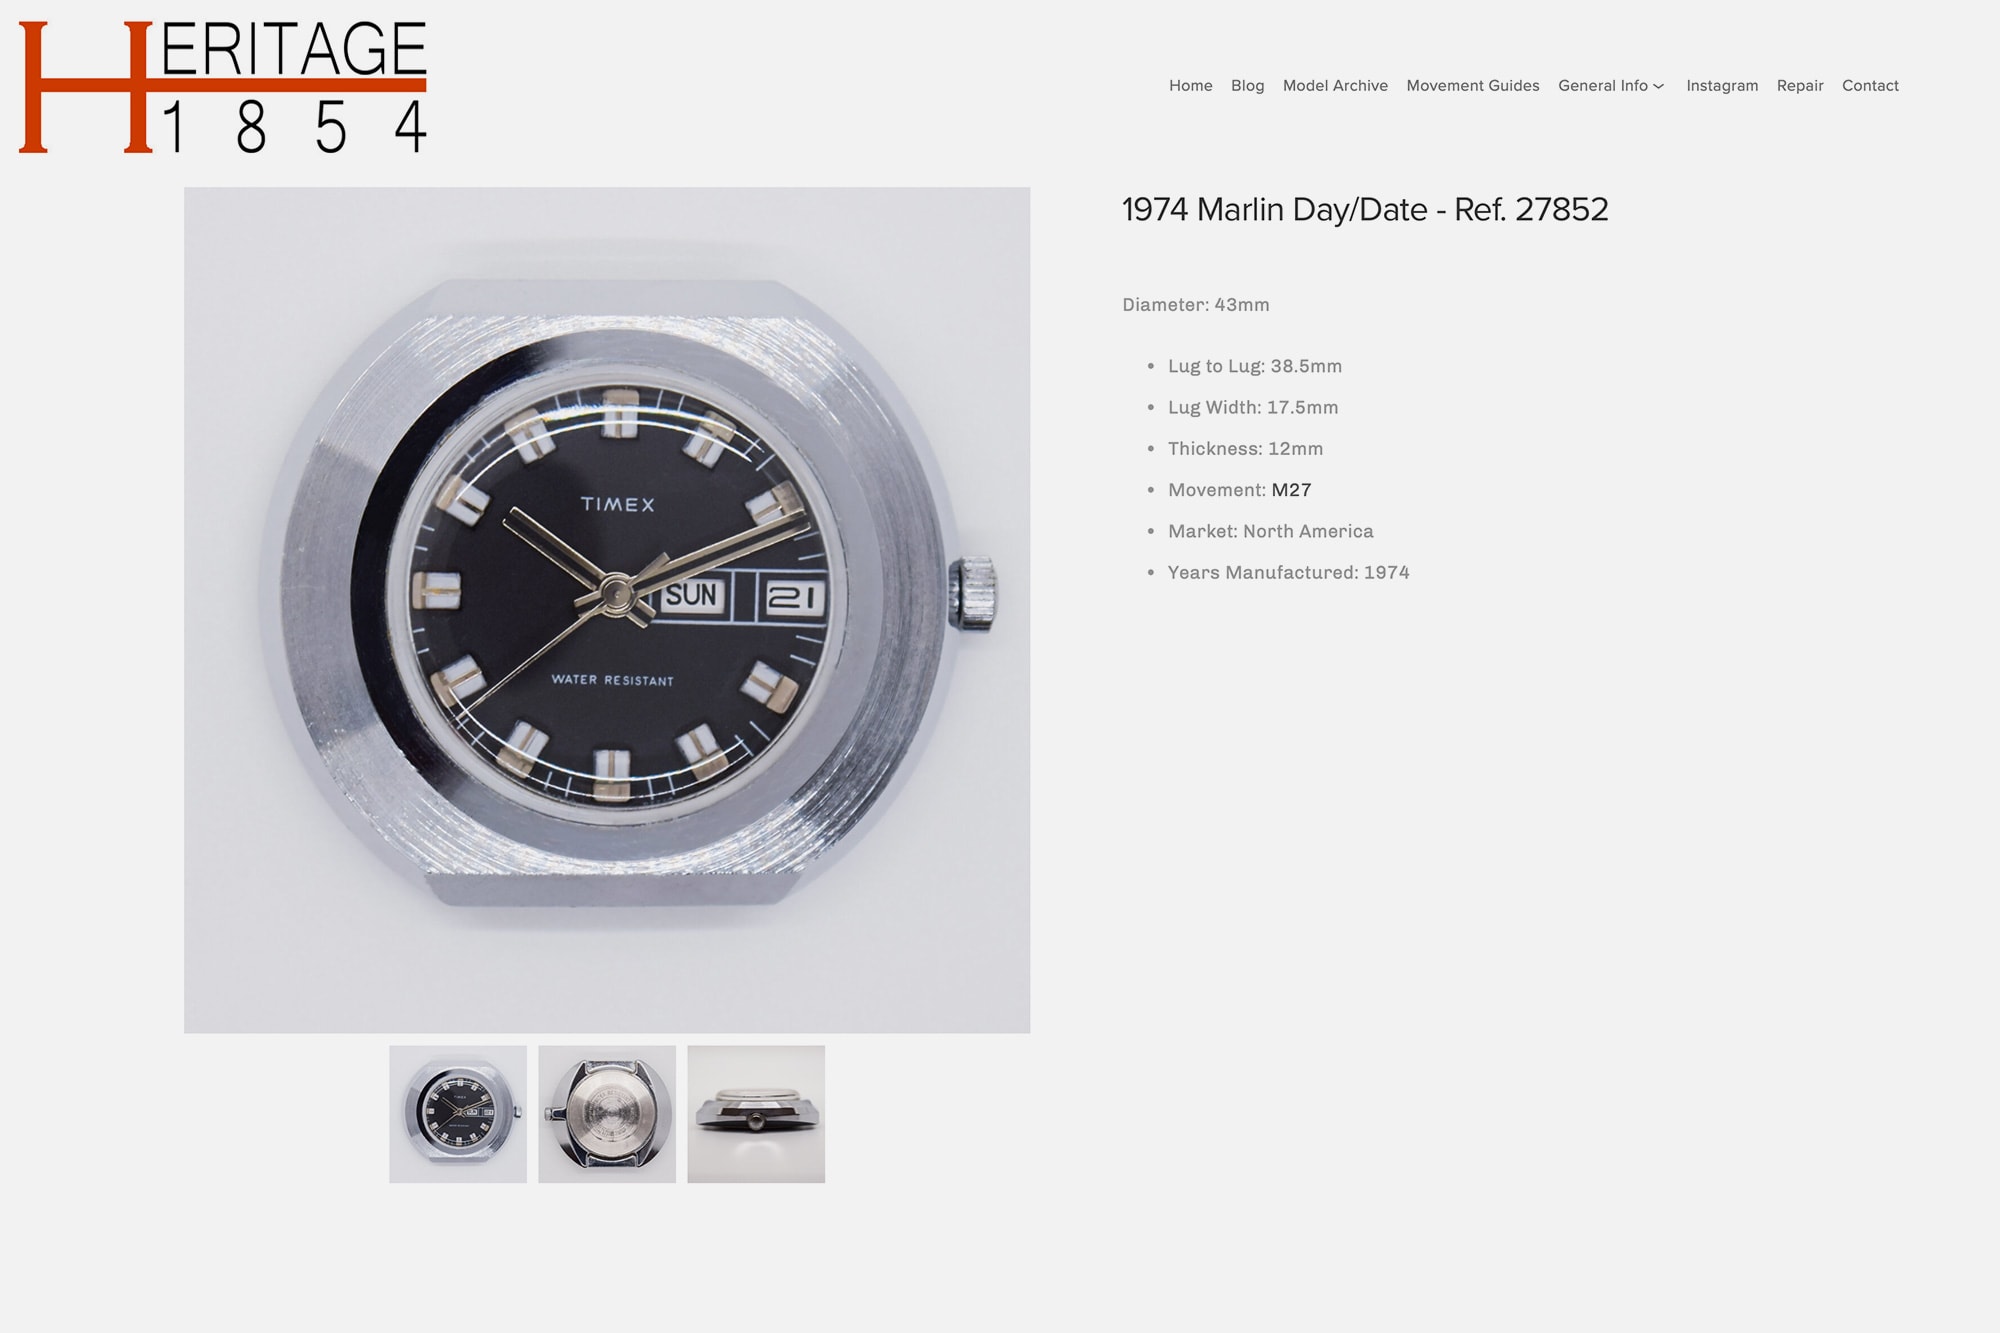 Introducing Heritage 1854, a Comprehensive Vintage Timex Resource